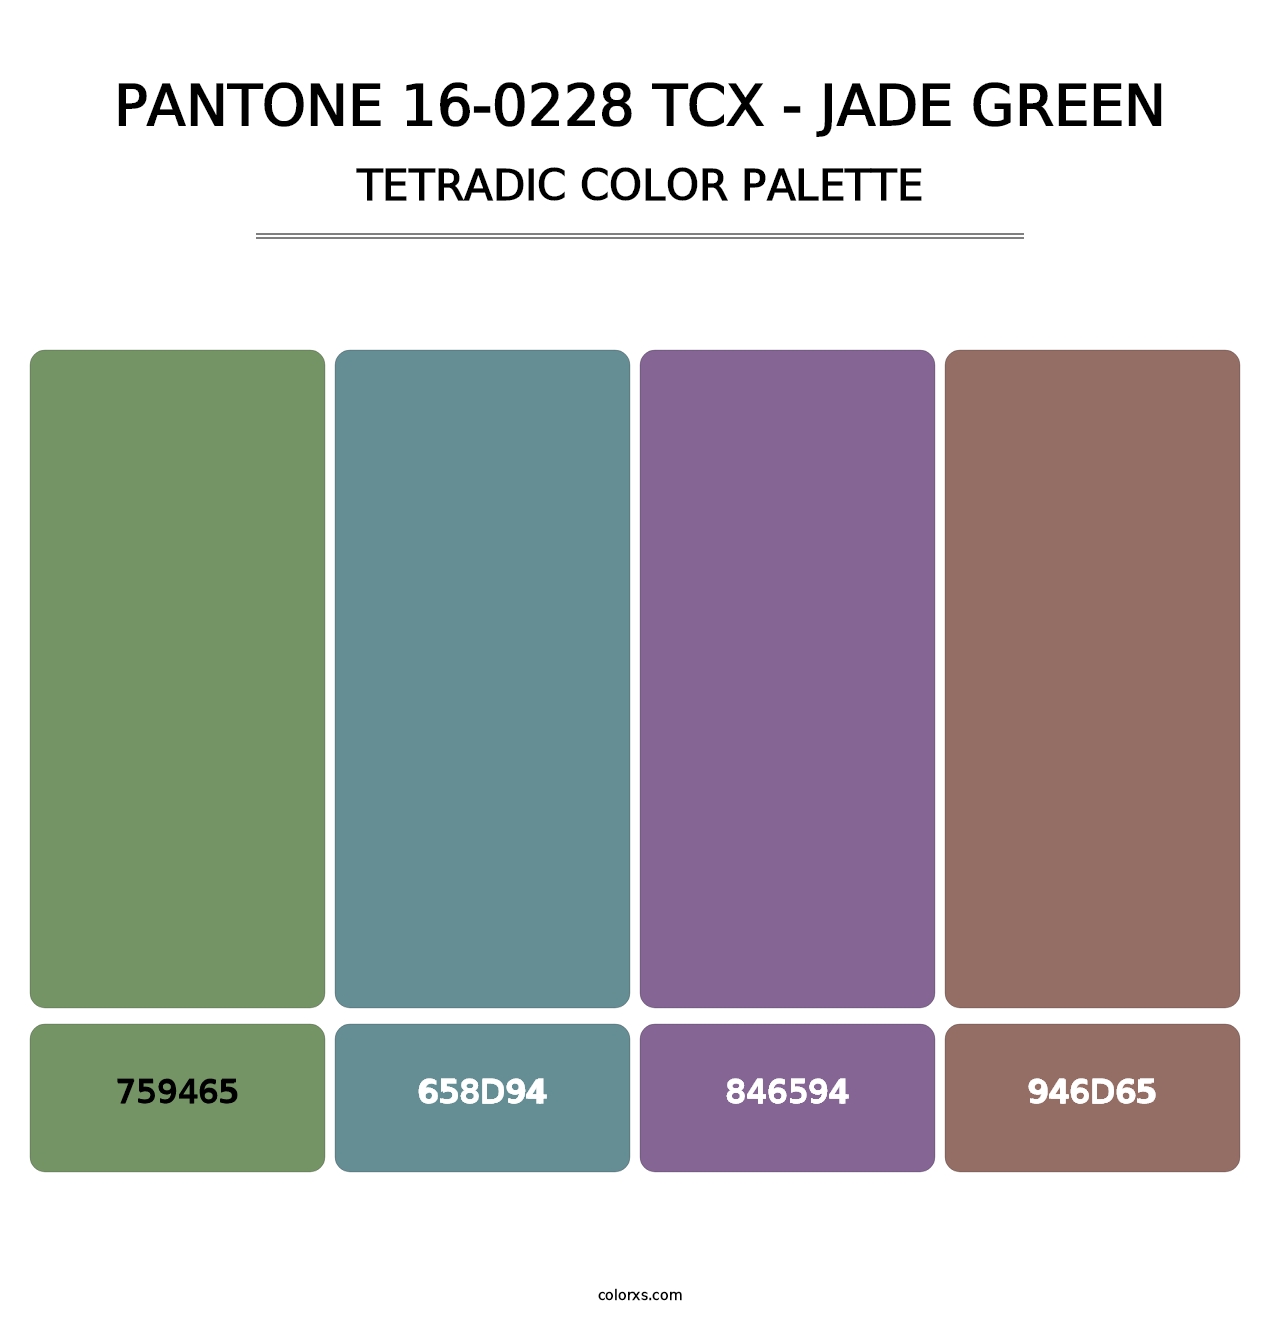 PANTONE 16-0228 TCX - Jade Green - Tetradic Color Palette